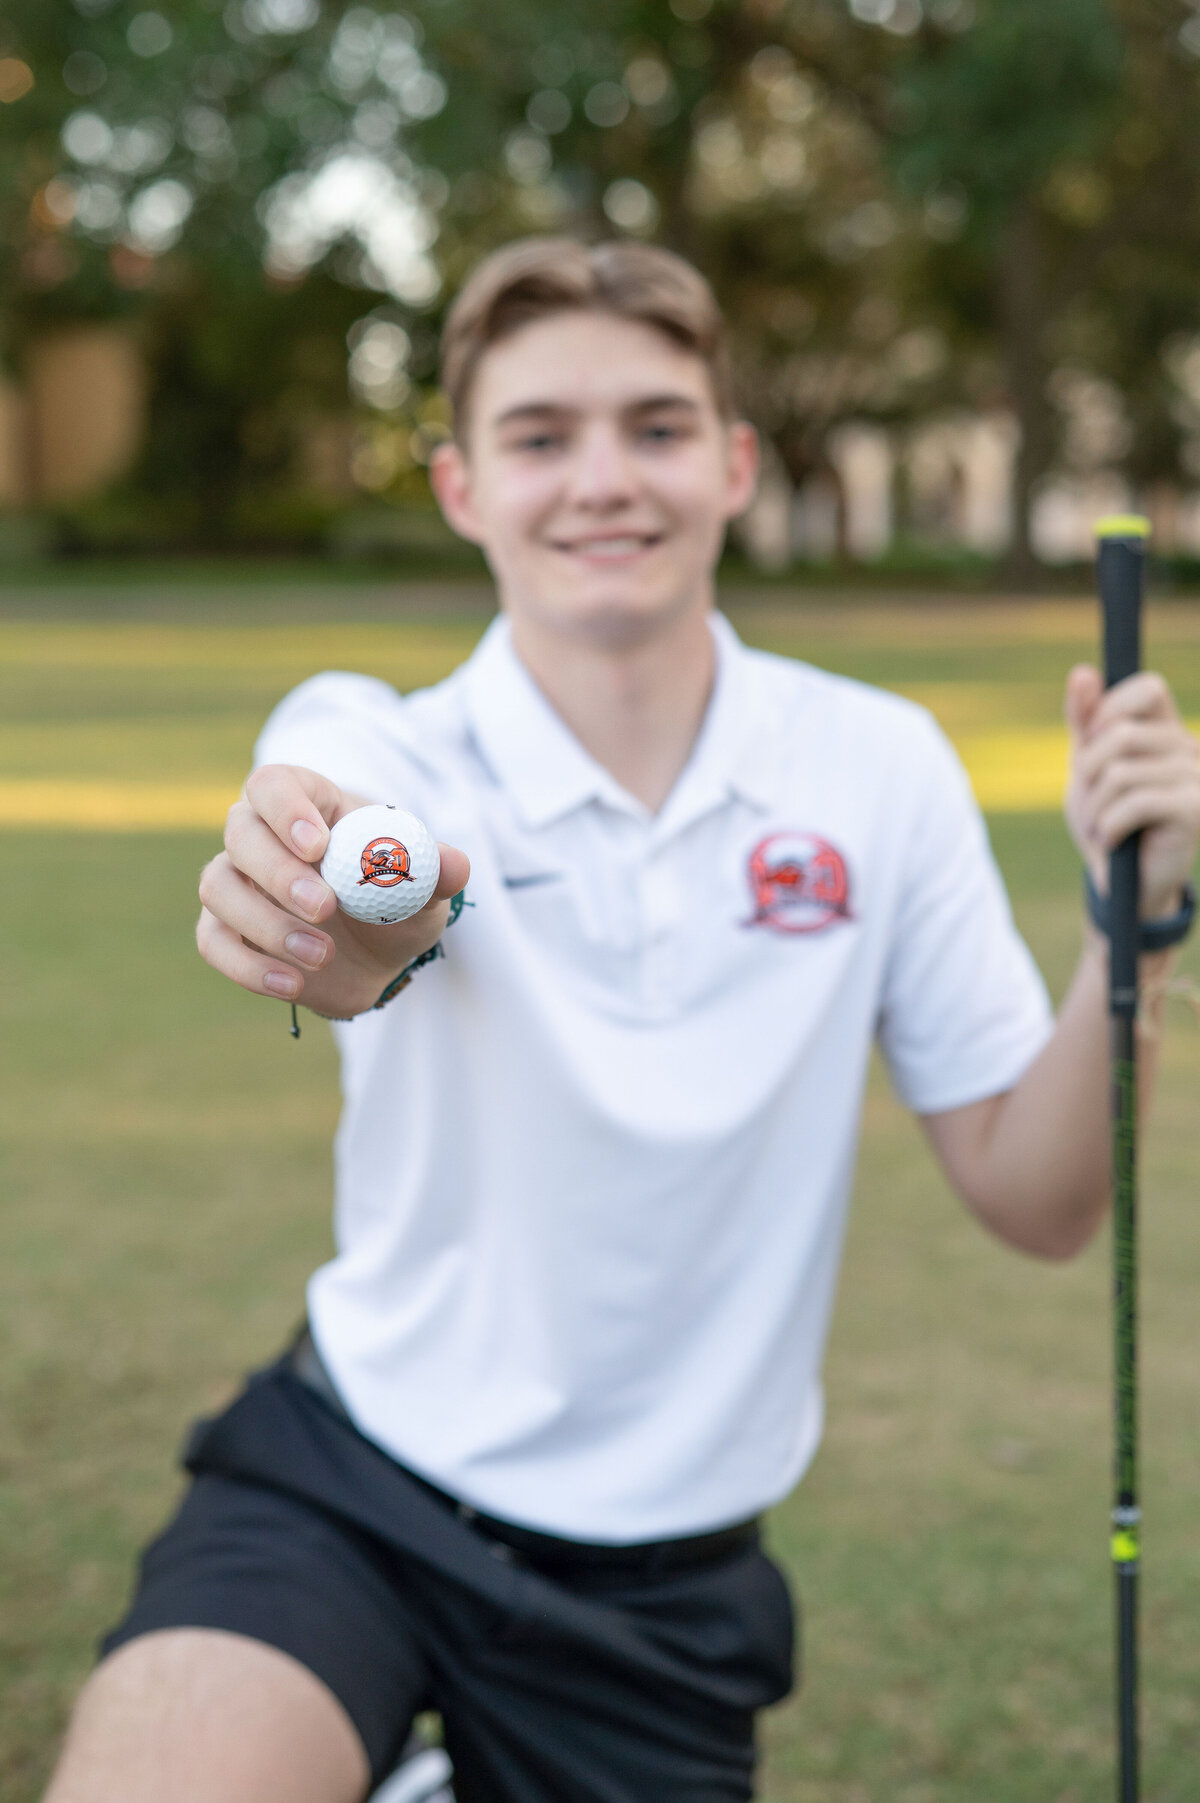 High school senior boy with golf club holding golf ball to the camera.